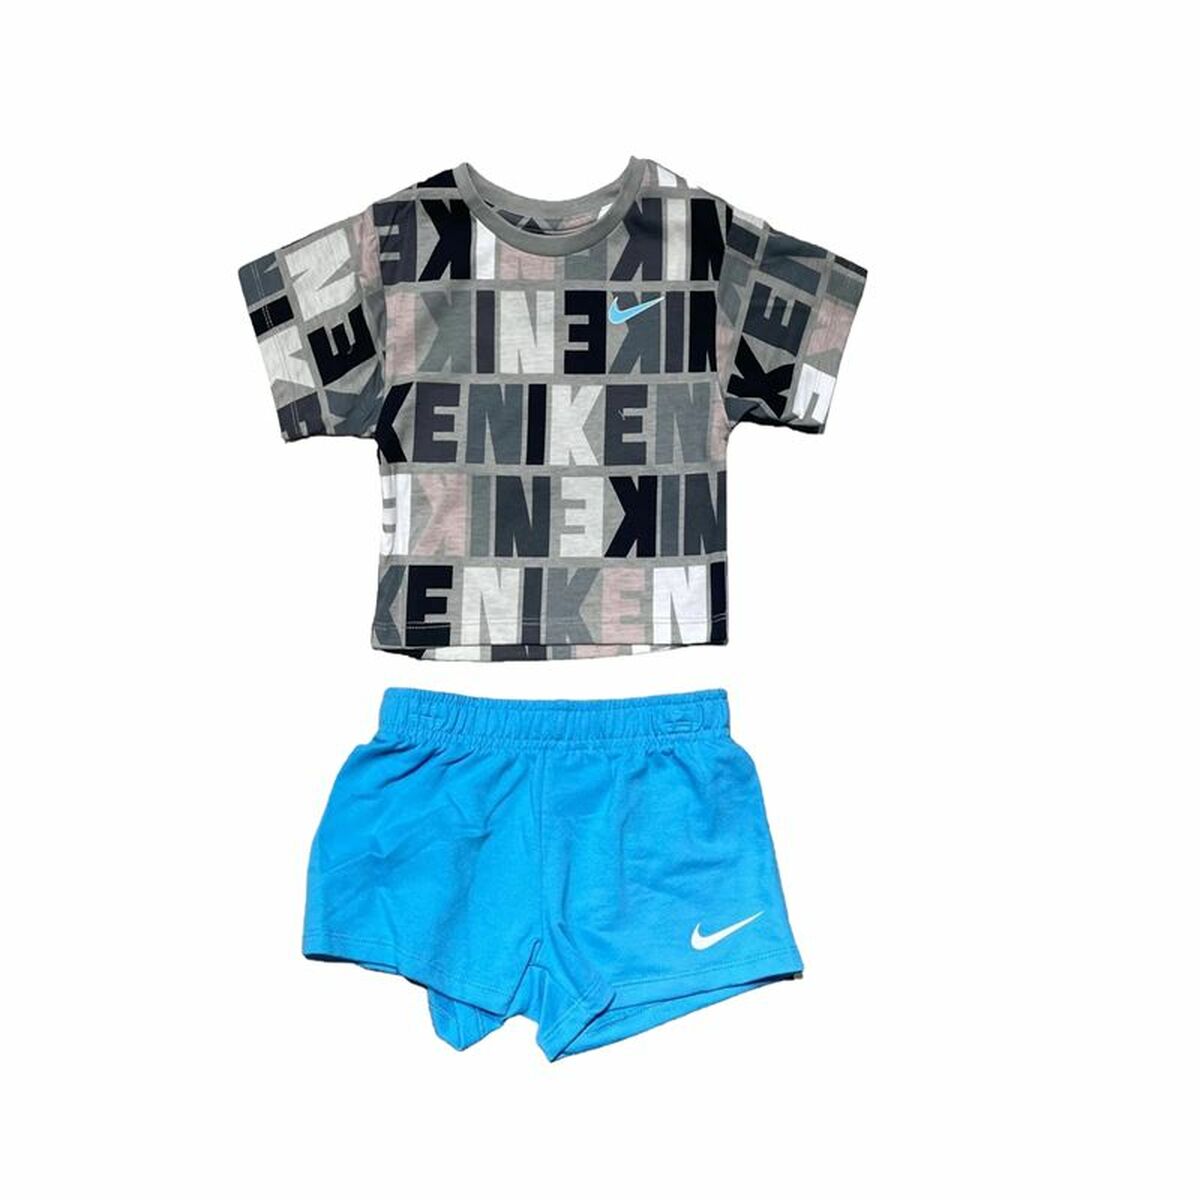 Ensemble de Sport pour Enfants Nike  Knit Short Bleu